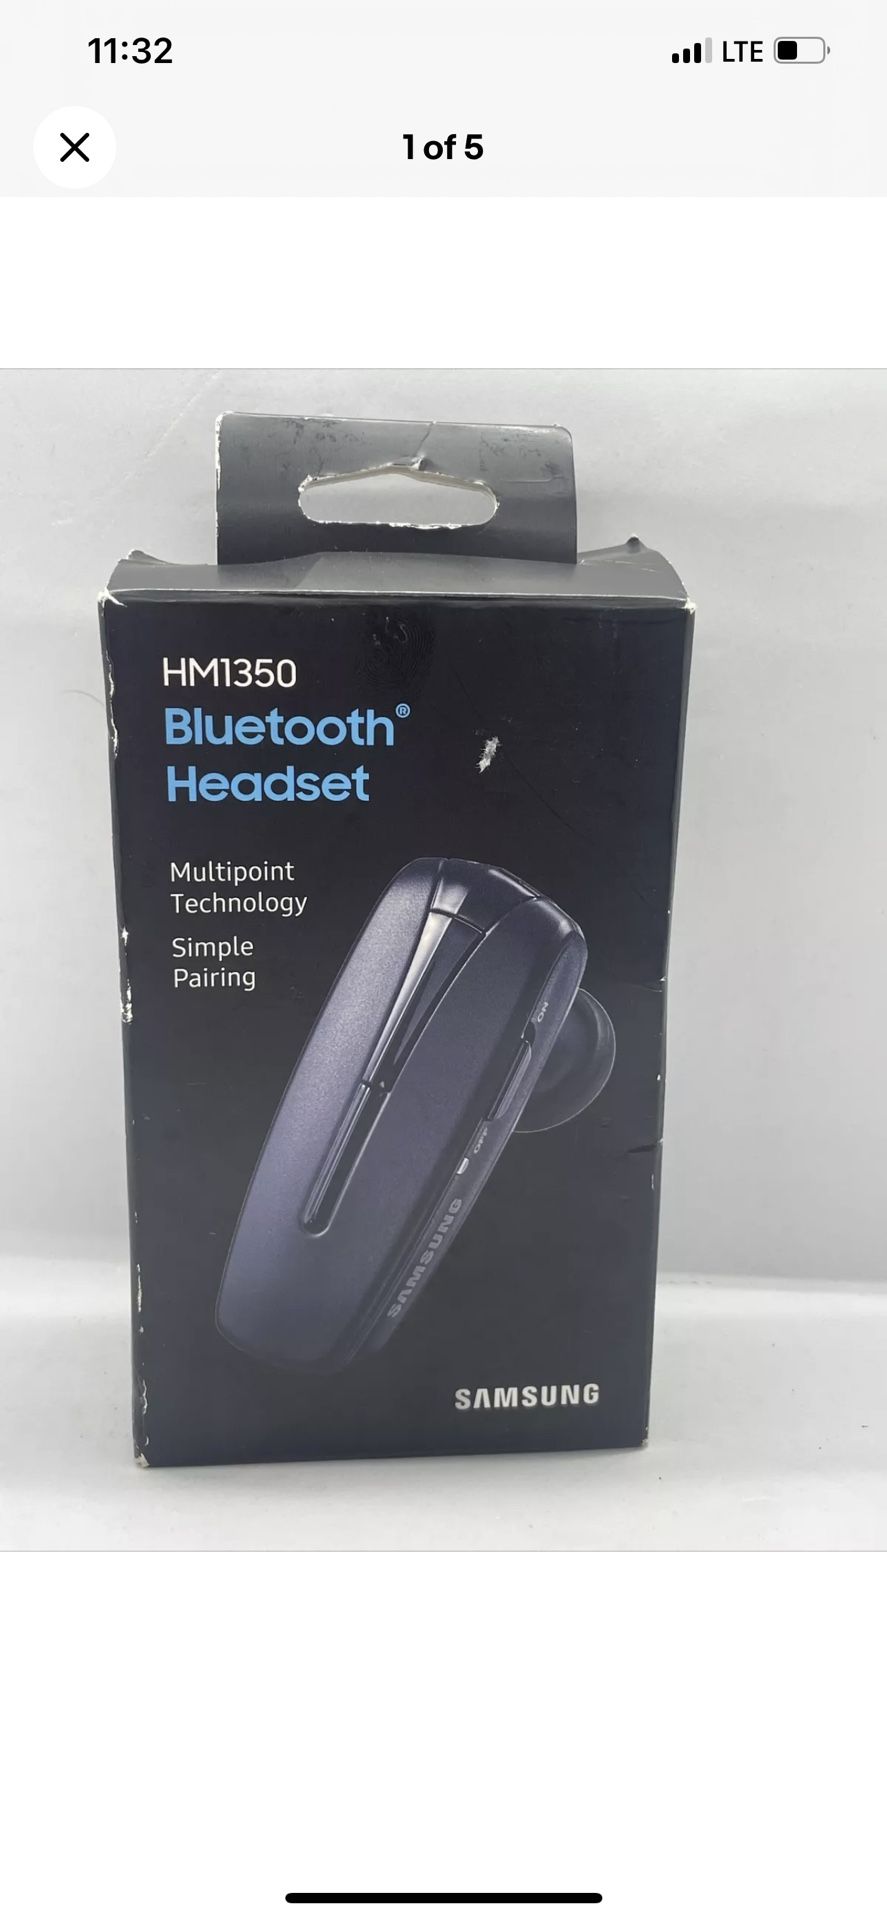 Samsung HM1350 Bluetooth Headset Black